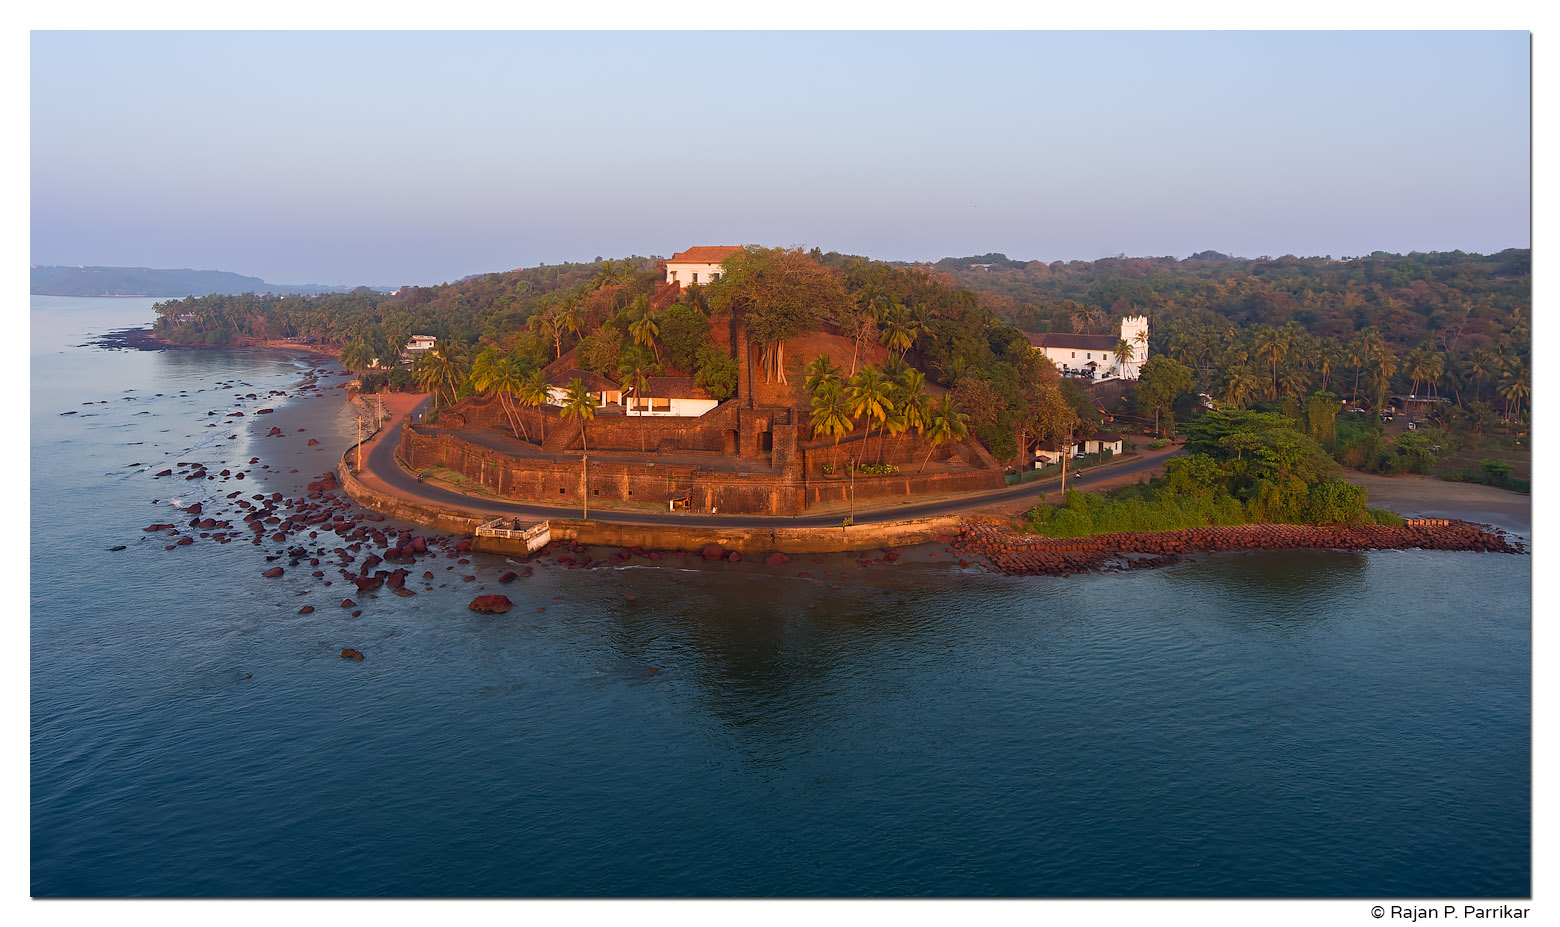 Reis Magos Fort and Church, Goa